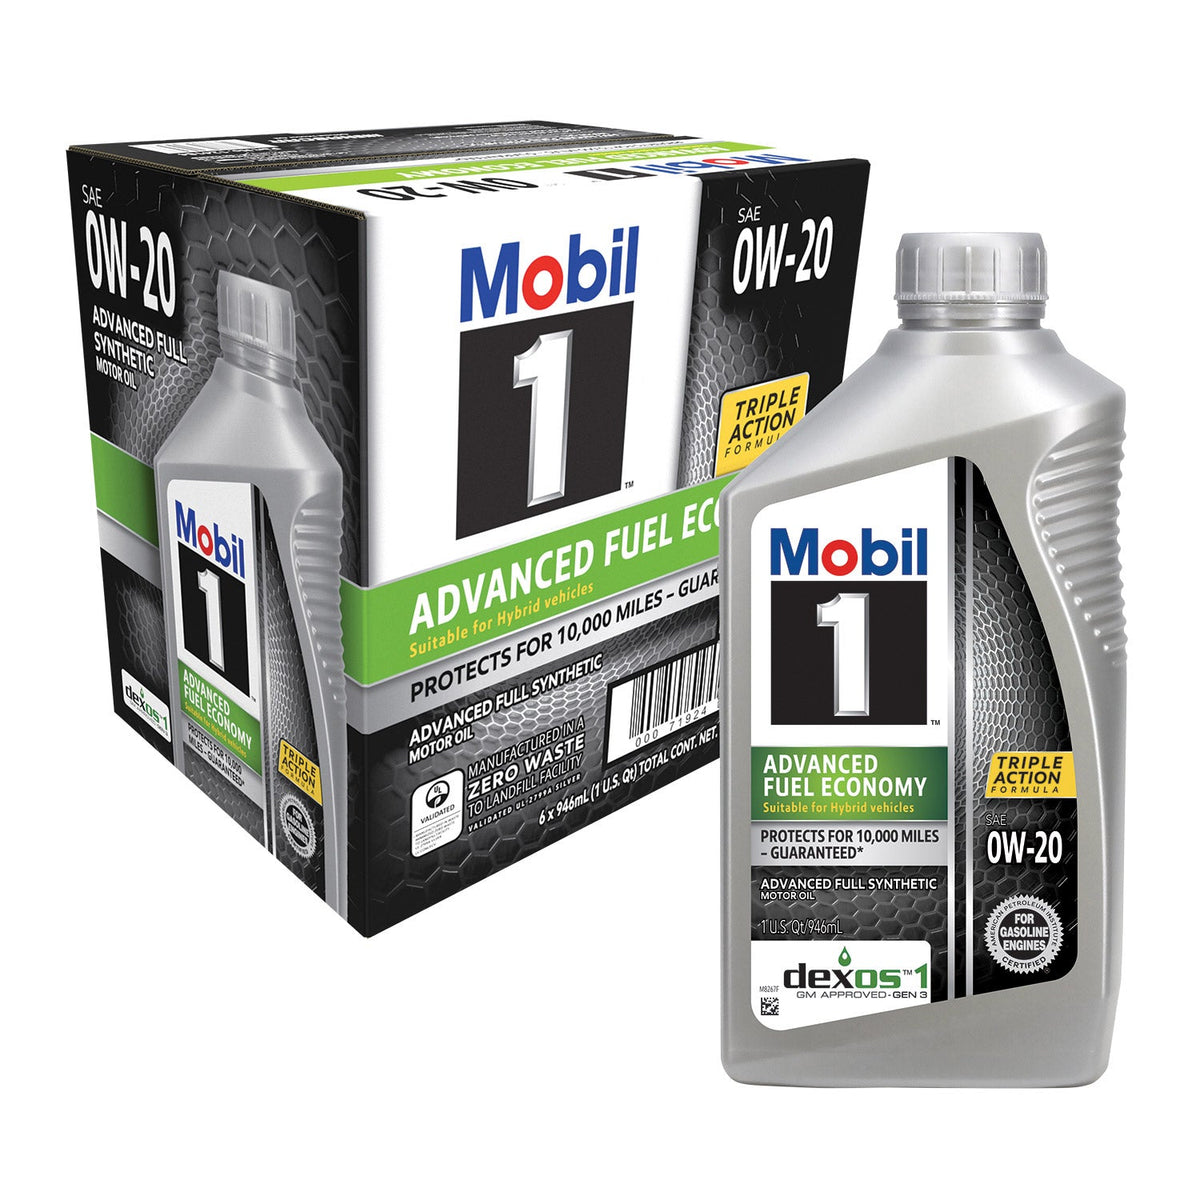 Mobil 1 Advanced Fuel Economy Full Synthetic Motor Oil 0W-20, 1-Quart/6-pack